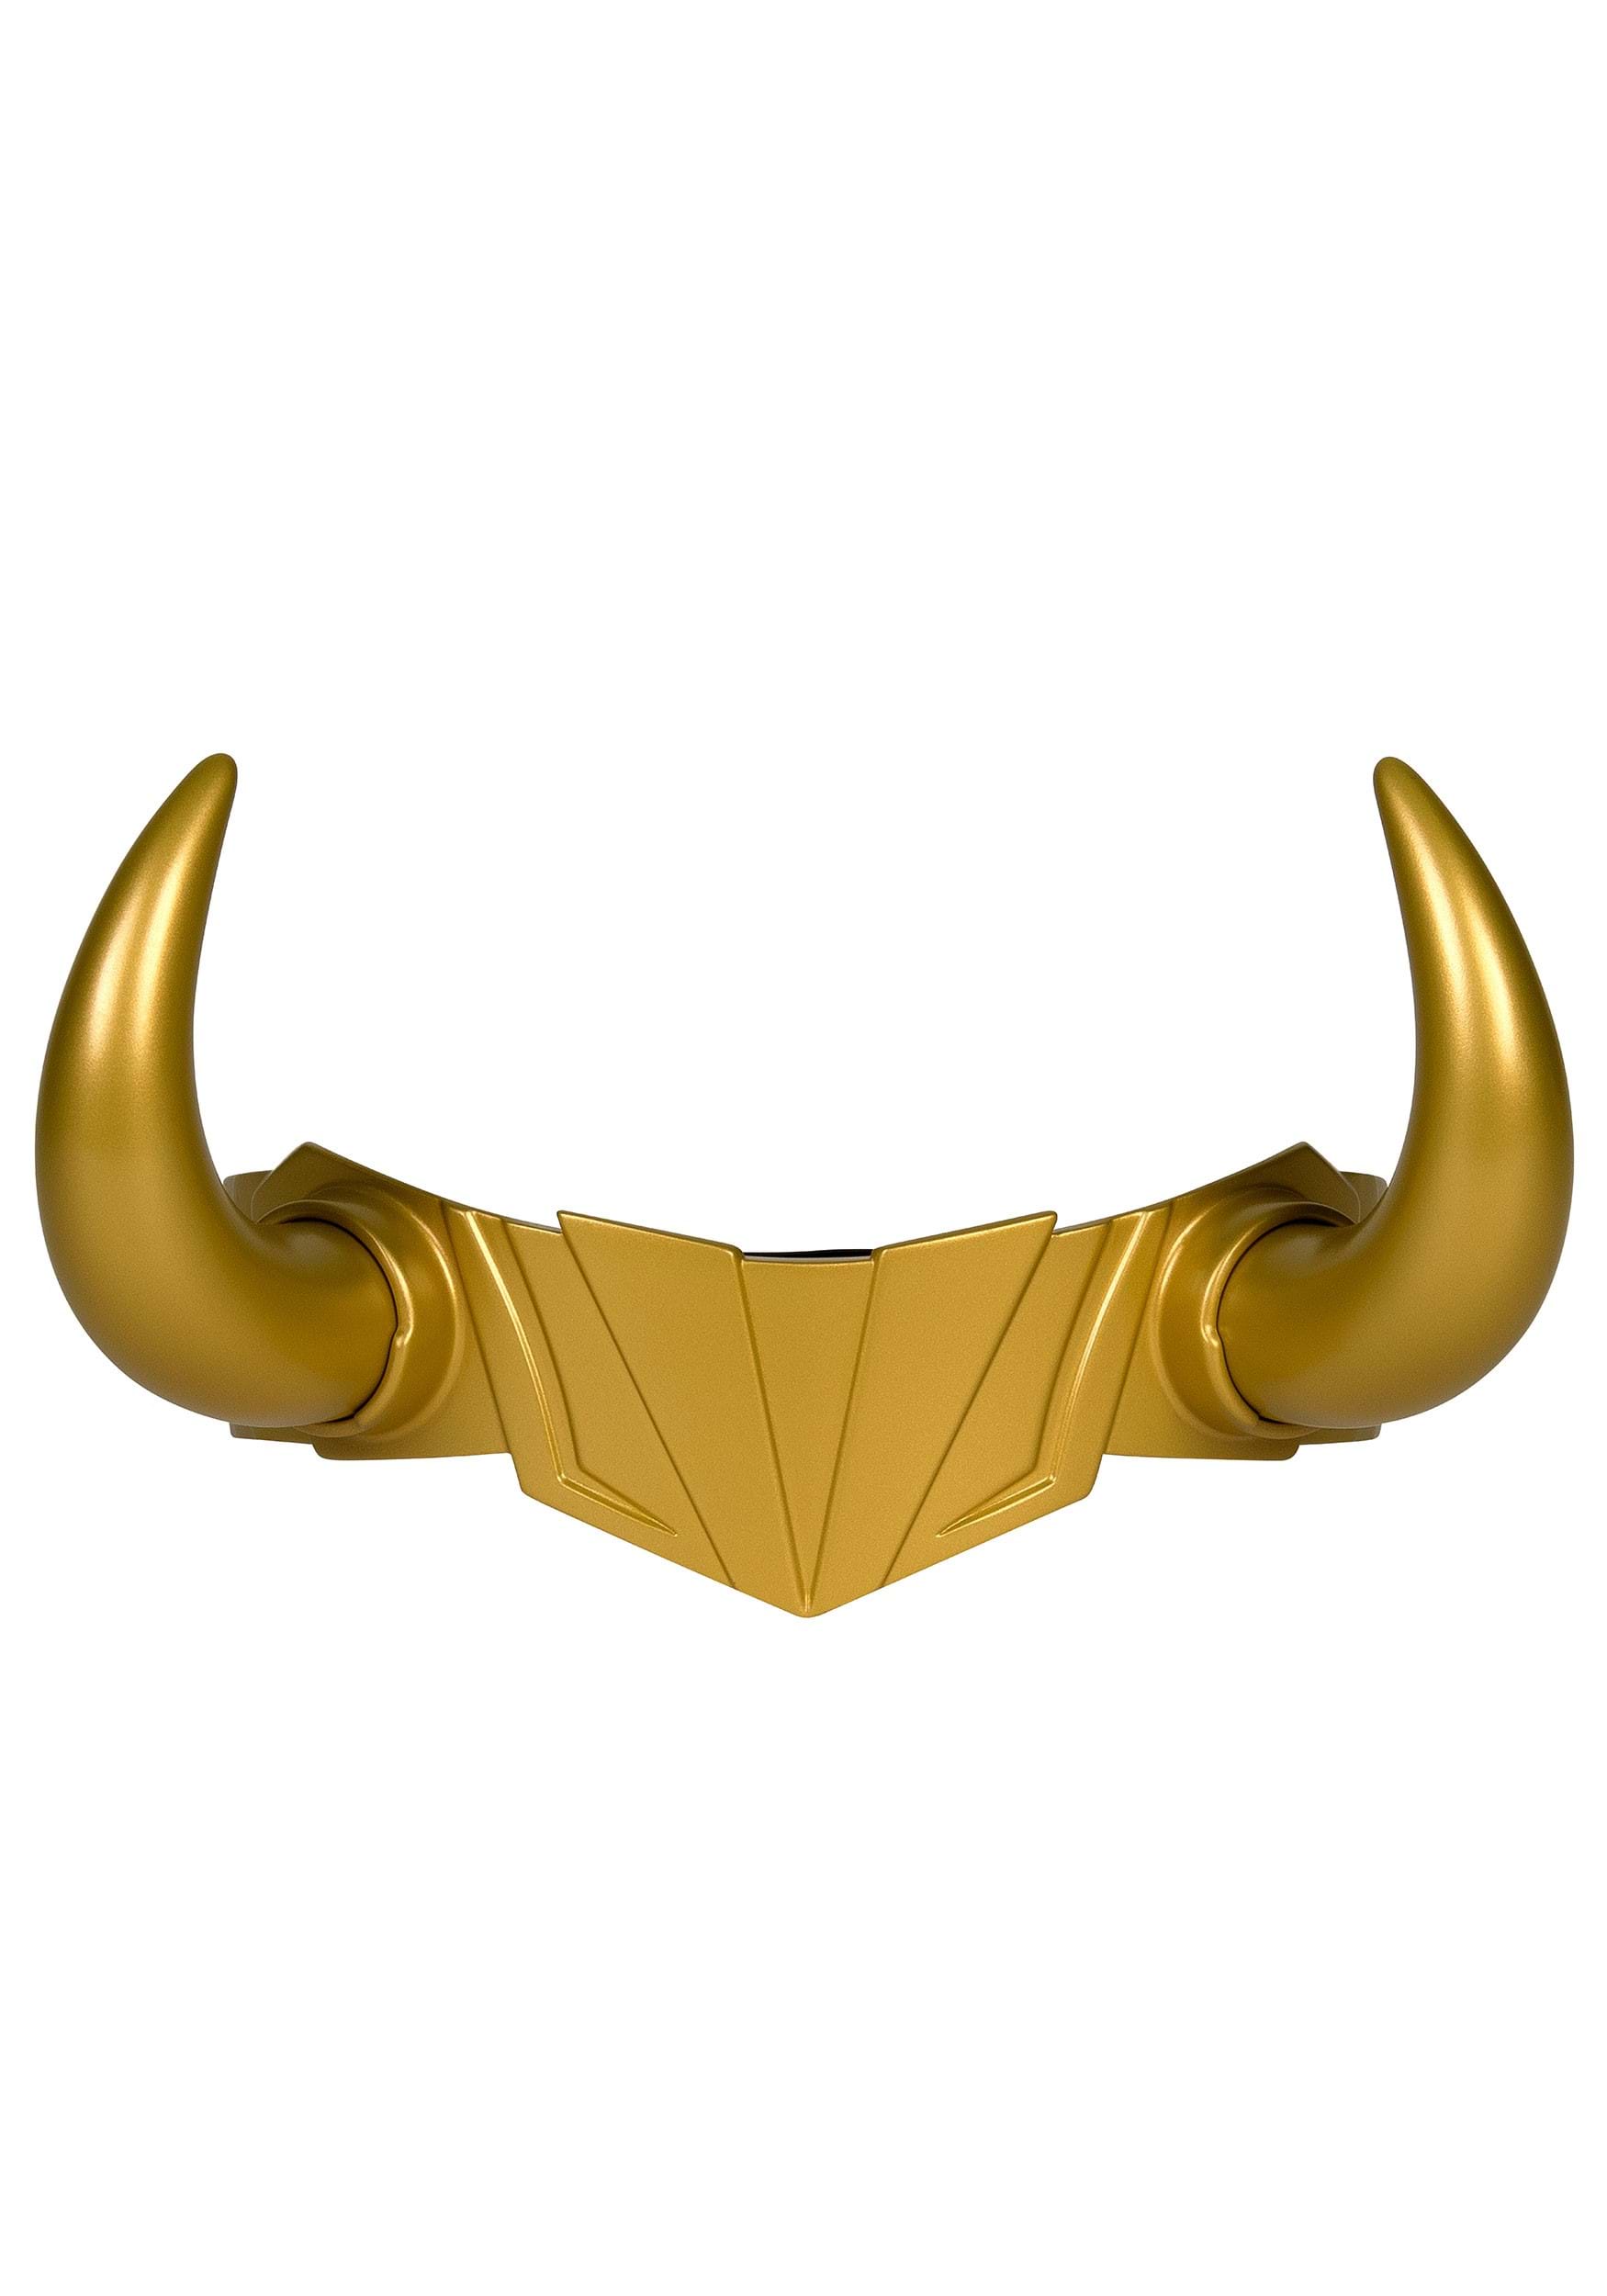 Loki Headpiece Costume Accessory , Marvel Accessories